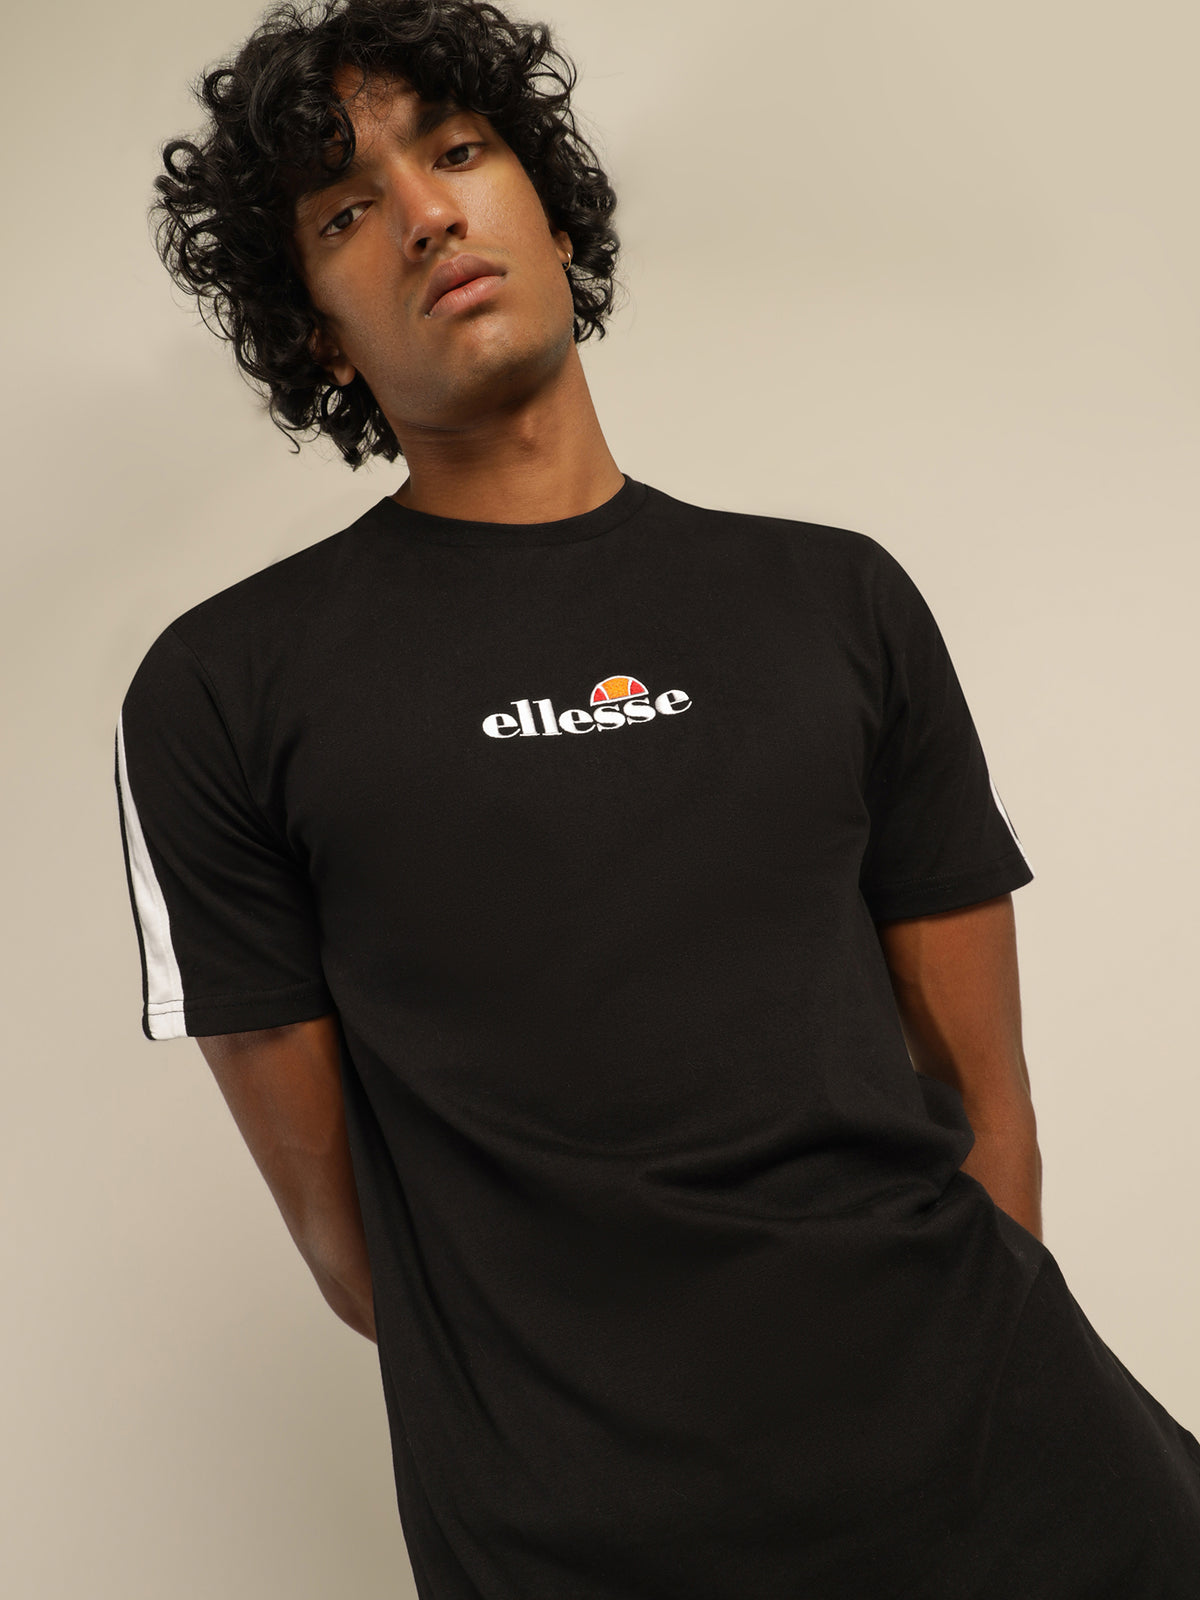 Carcano T-Shirt in Black